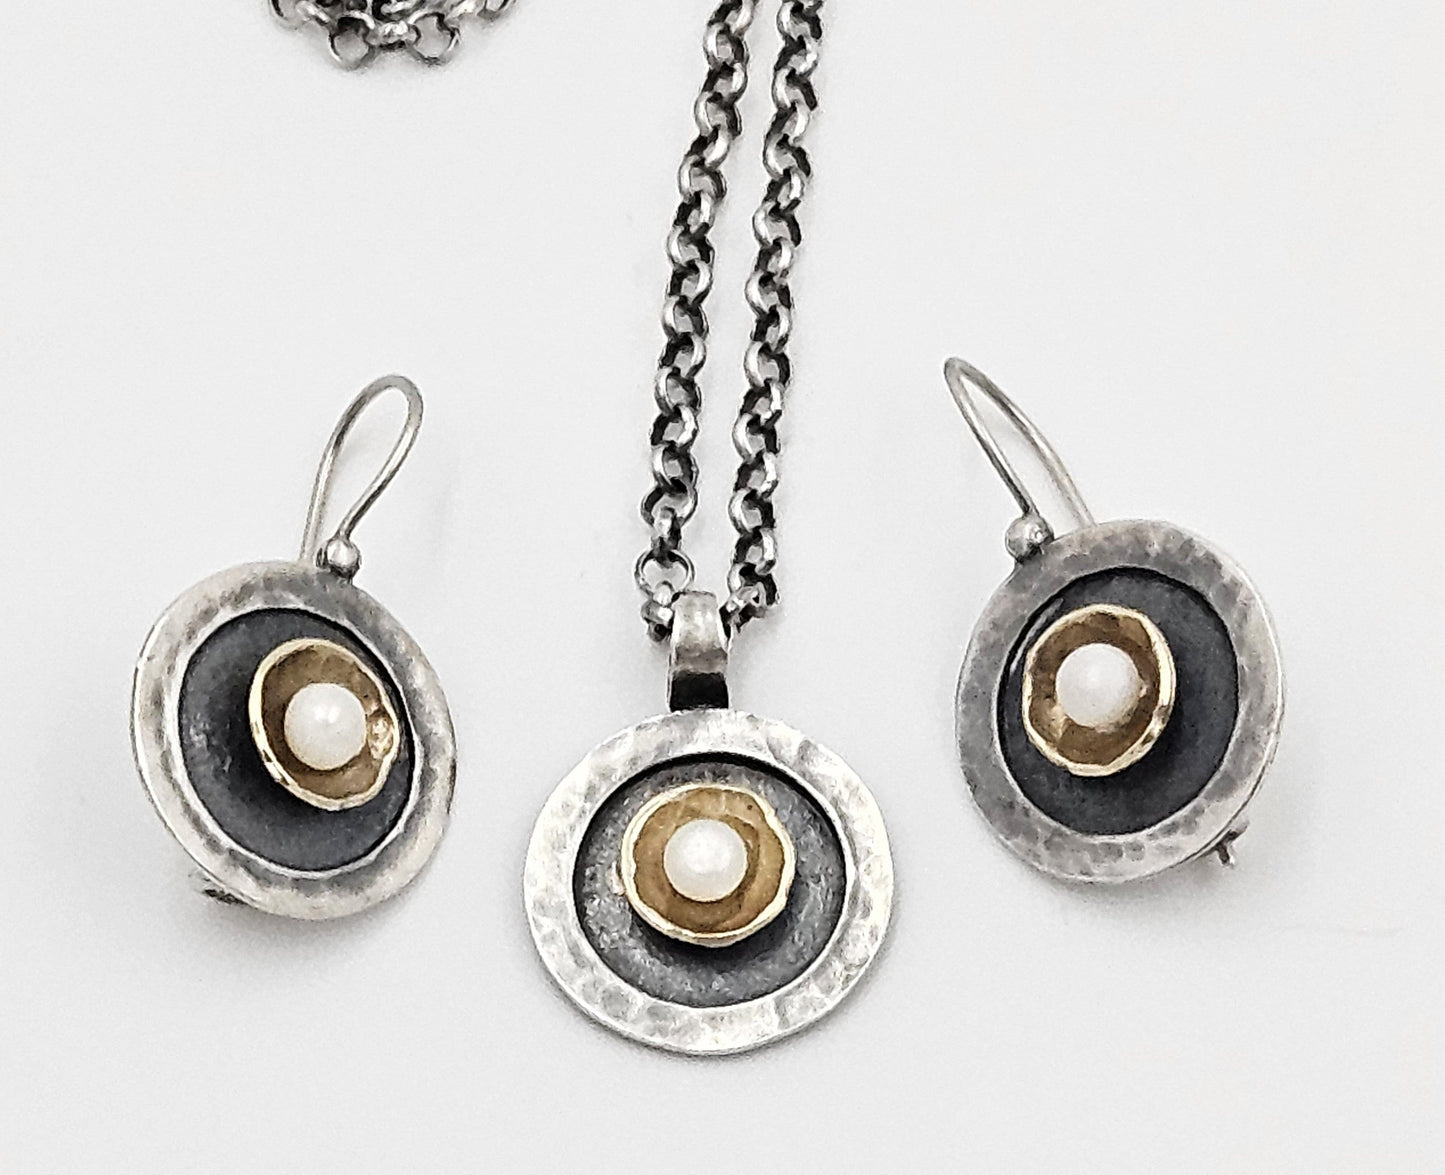 Golan Goldex Jewelry Sterling 14k Pearl Modernist Necklace & Earrings Set by Golan Goldex of Israel